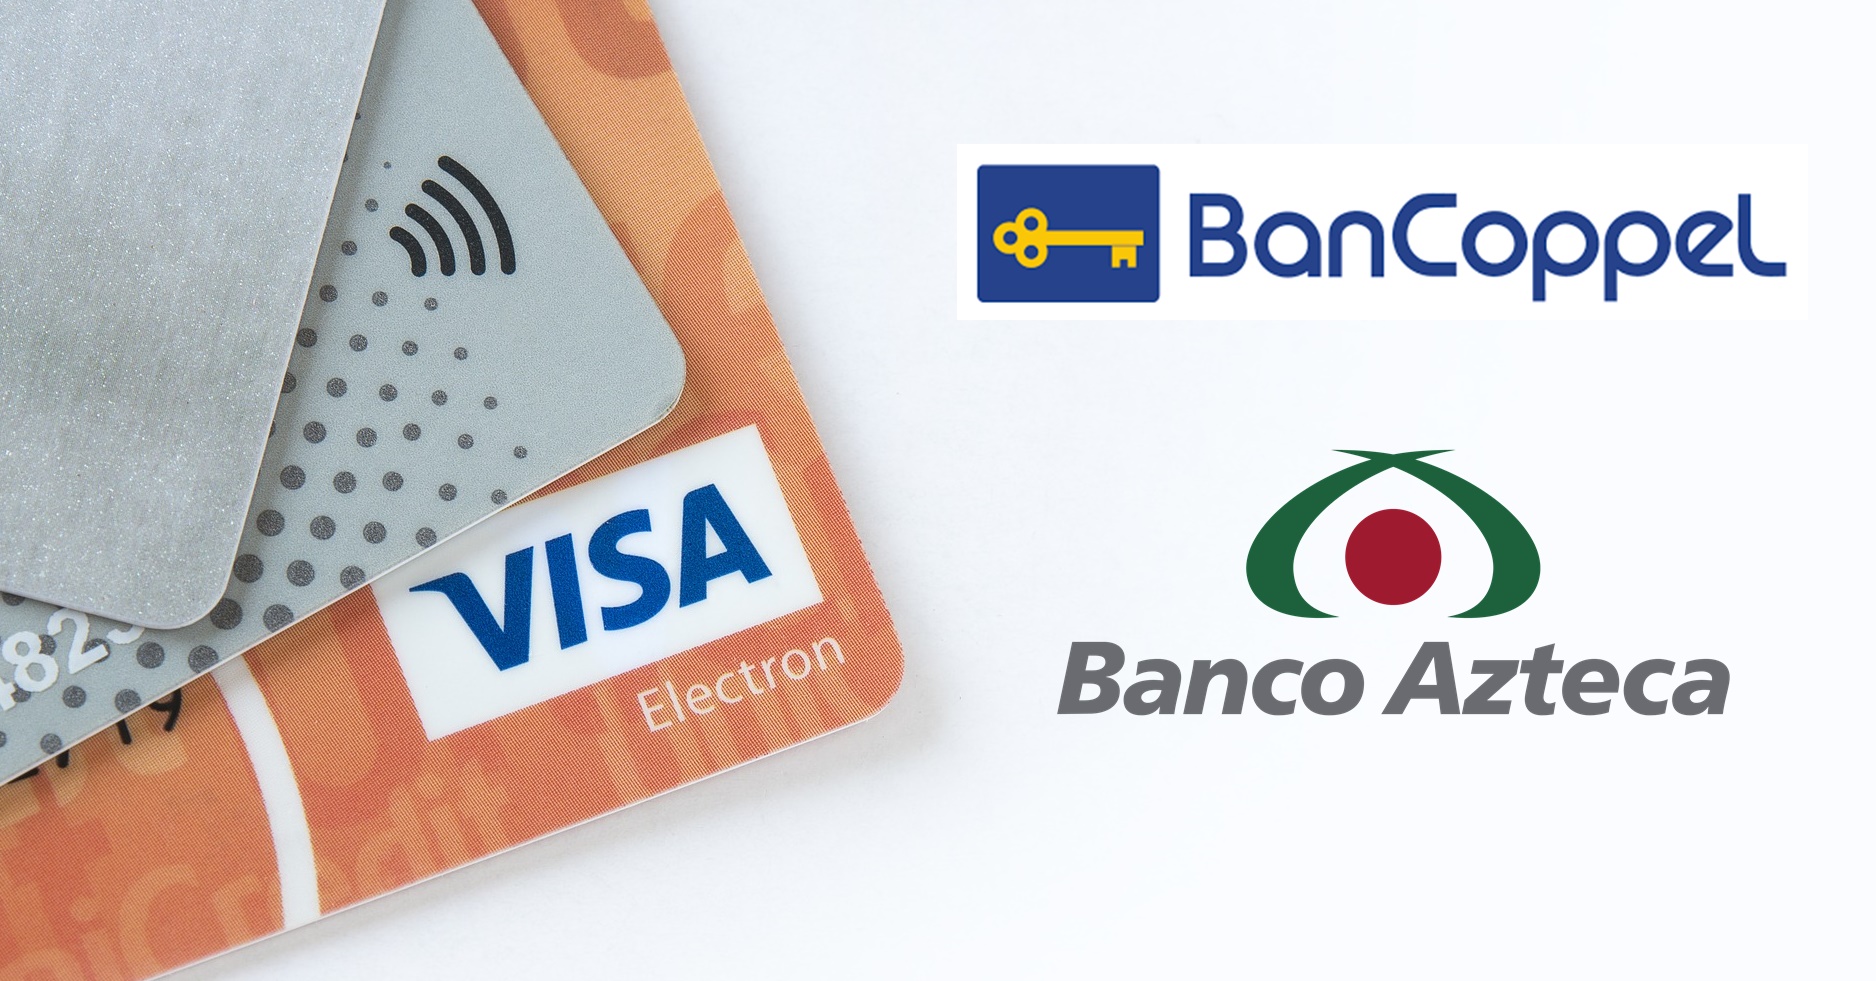 La mejor tarjeta de débito básica: Banco Azteca vs Bancoppel